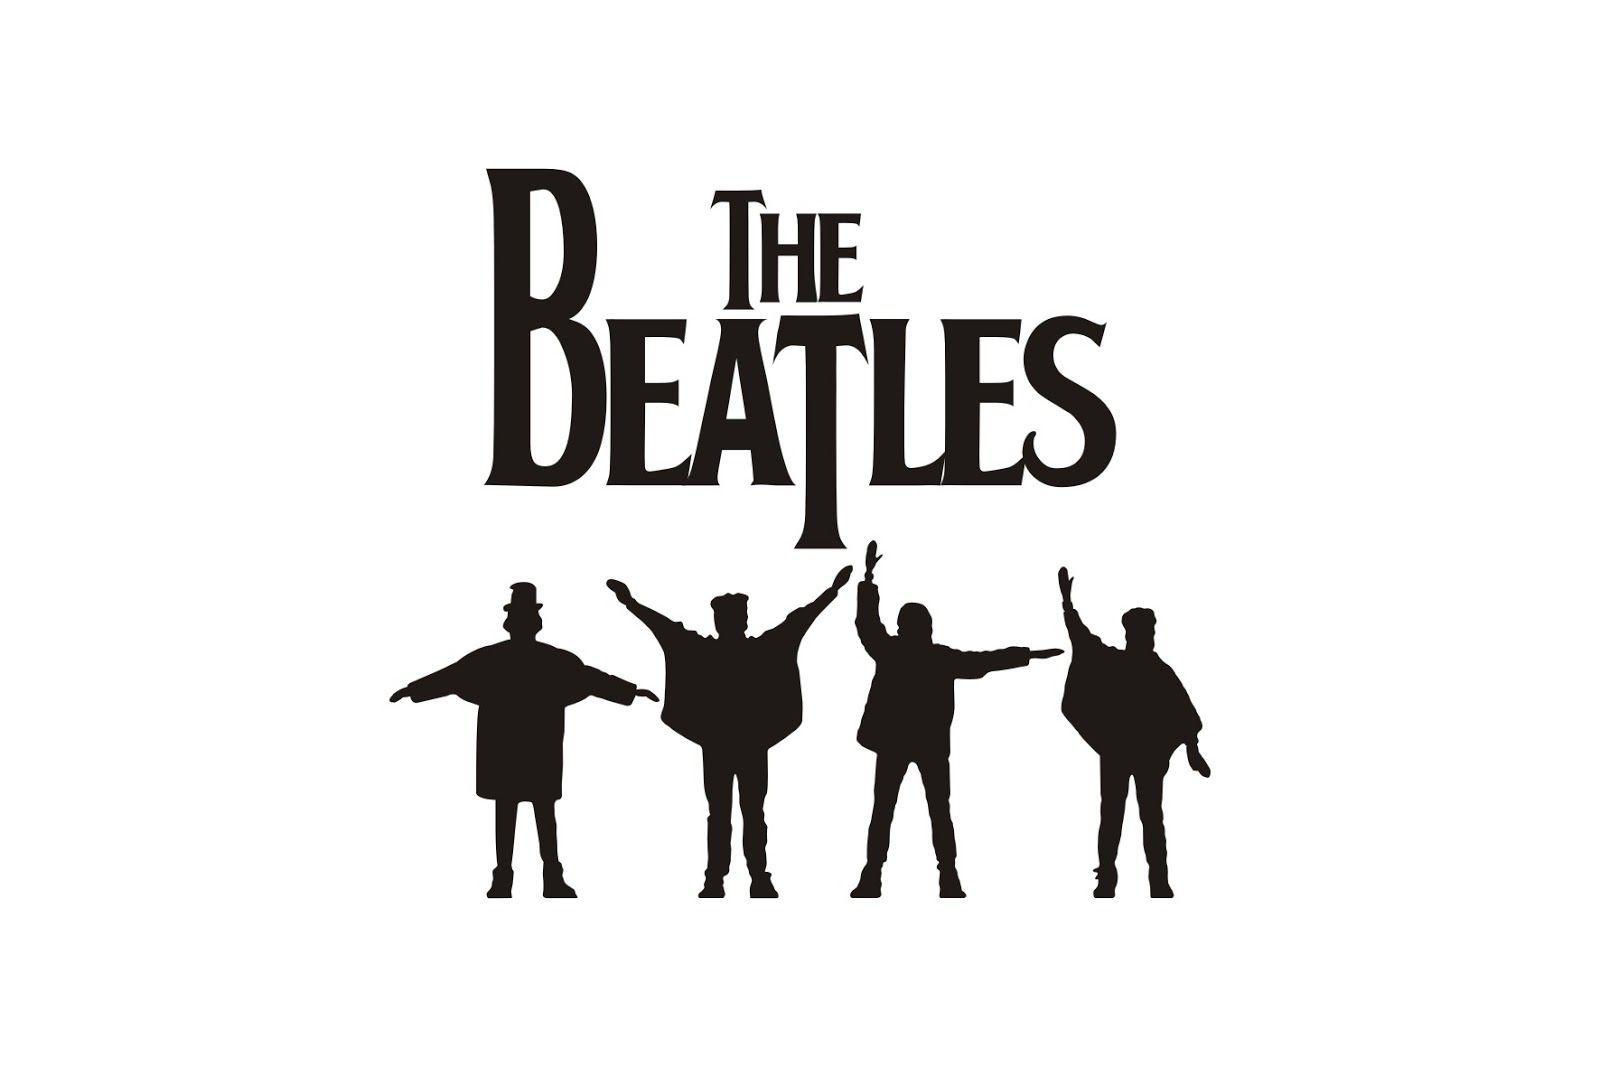 The Beatles Logo - The Beatles! * | Beatles | Pinterest | The Beatles, Beatles albums ...